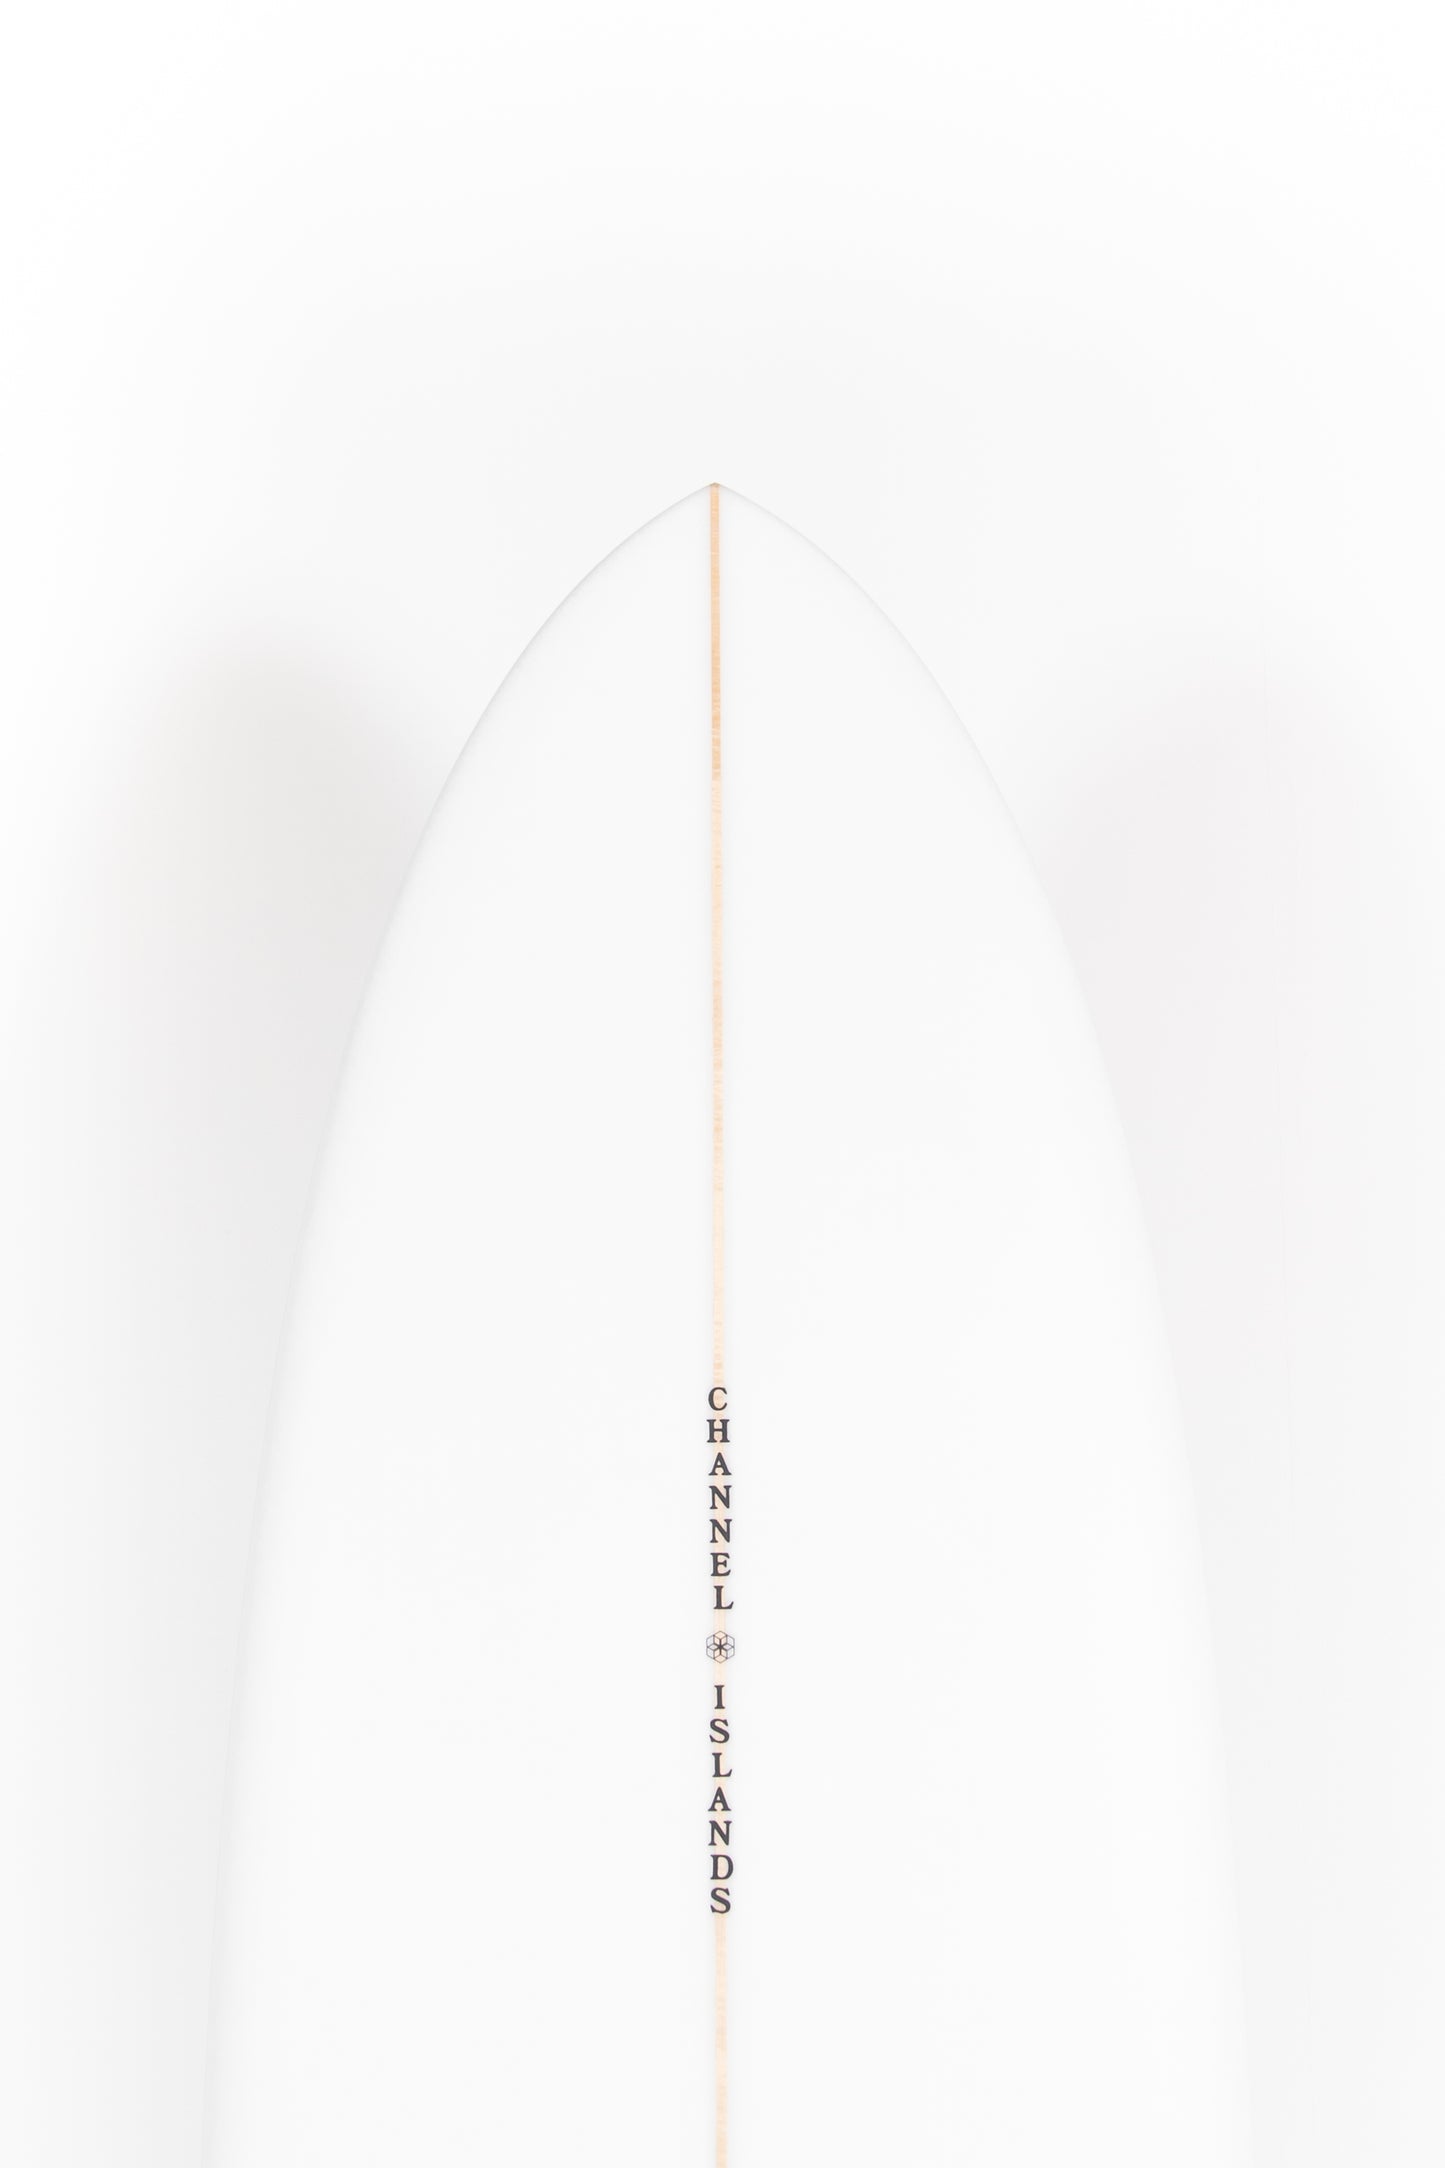 
                  
                    Pukas Surf Shop - Channel Islands - CI MID TWIN - 6'10" x 21 3/16 x 2 13/16 - 44,75L - CI32367
                  
                